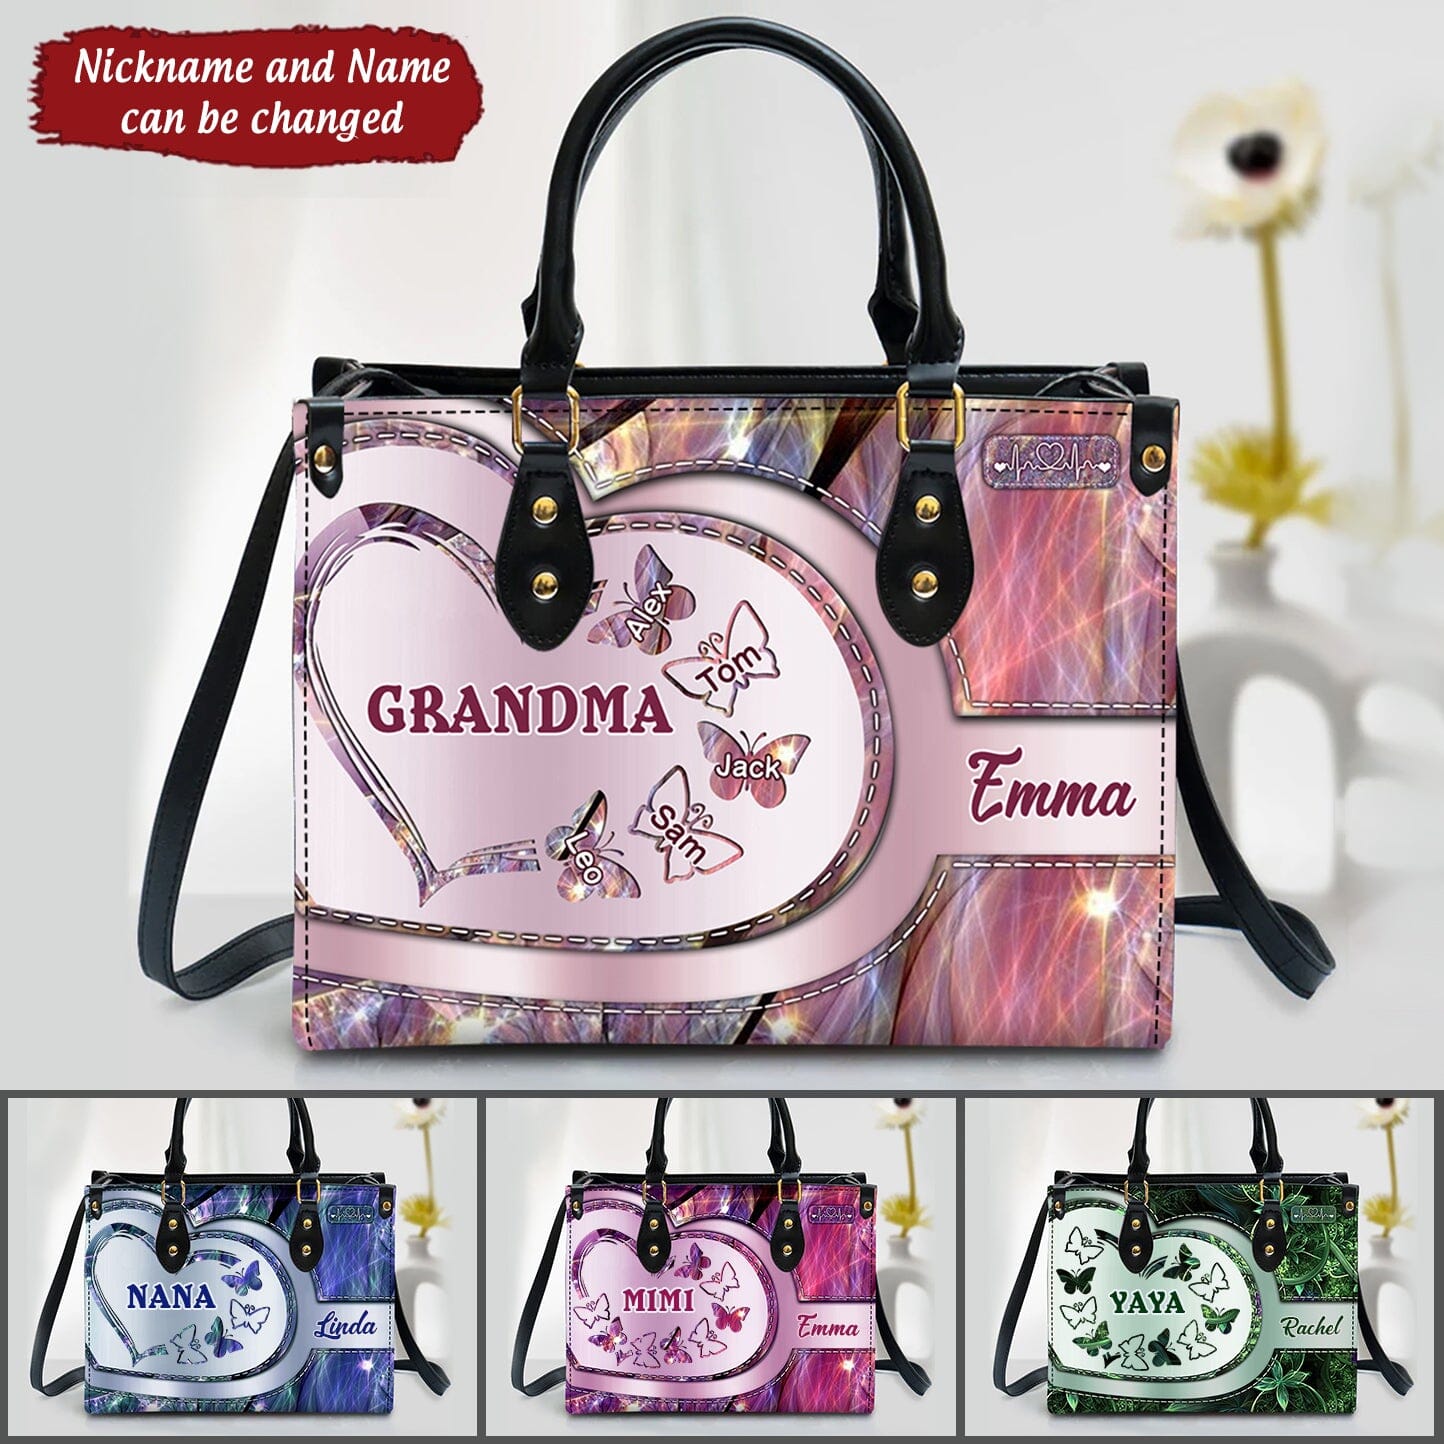 Sparkling Grandma- Mom With Butterfly Kids, Multi Colors Personalized Leath Handbag NVL22JUL22TT3 Leather Handbag Humancustom - Unique Personalized Gifts Black 